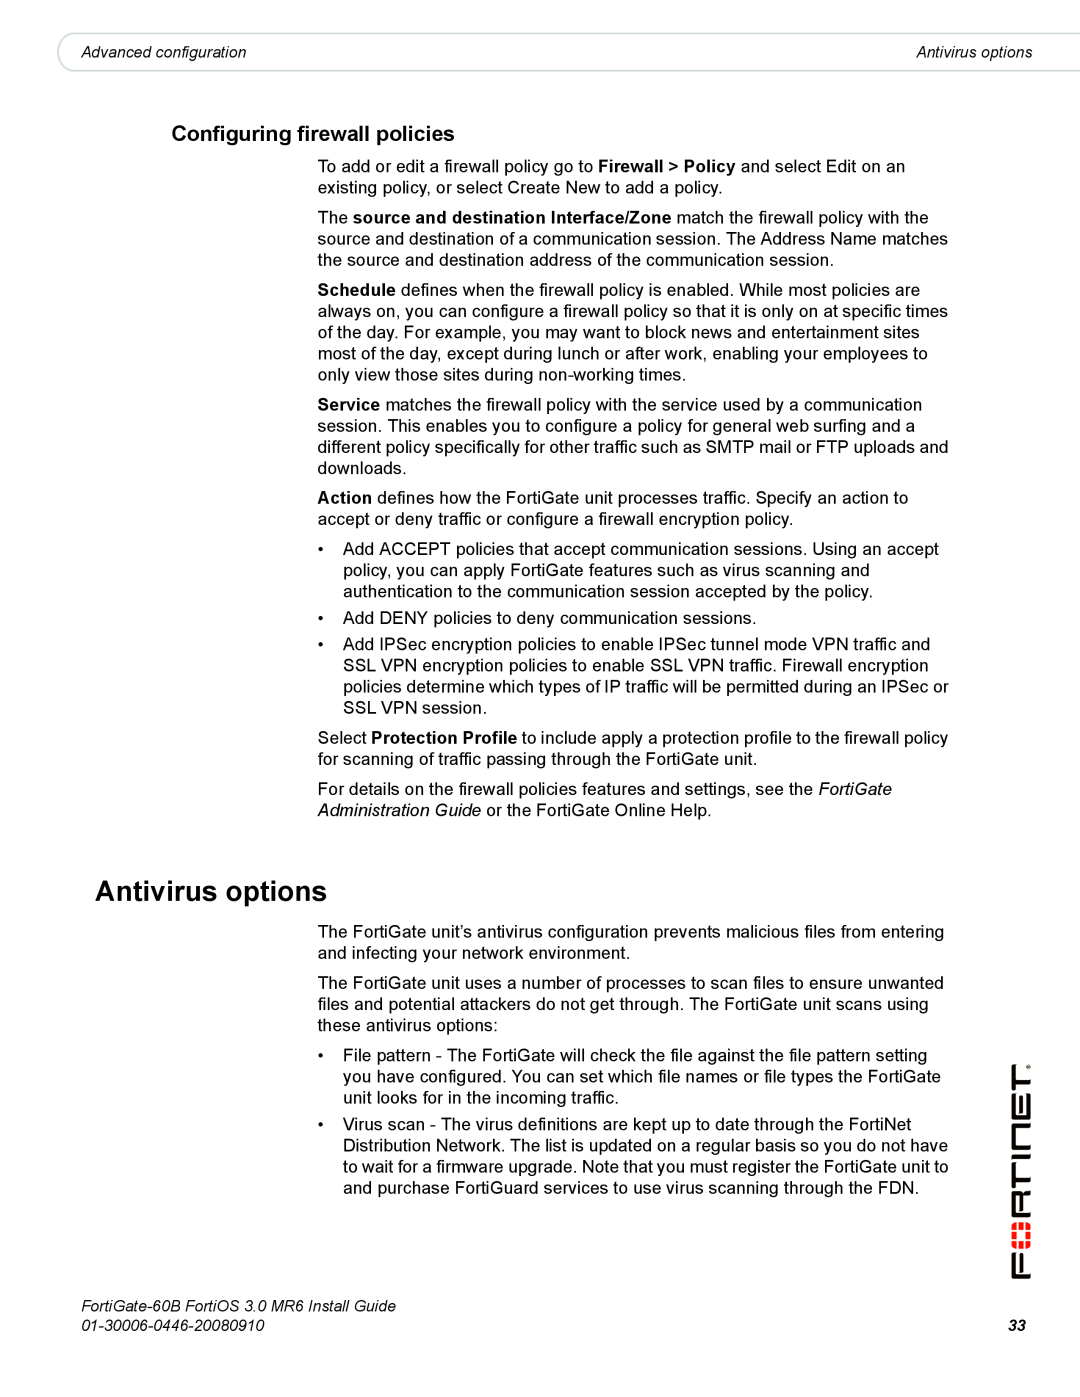 Fortinet 60B manual Antivirus options, Configuring firewall policies 